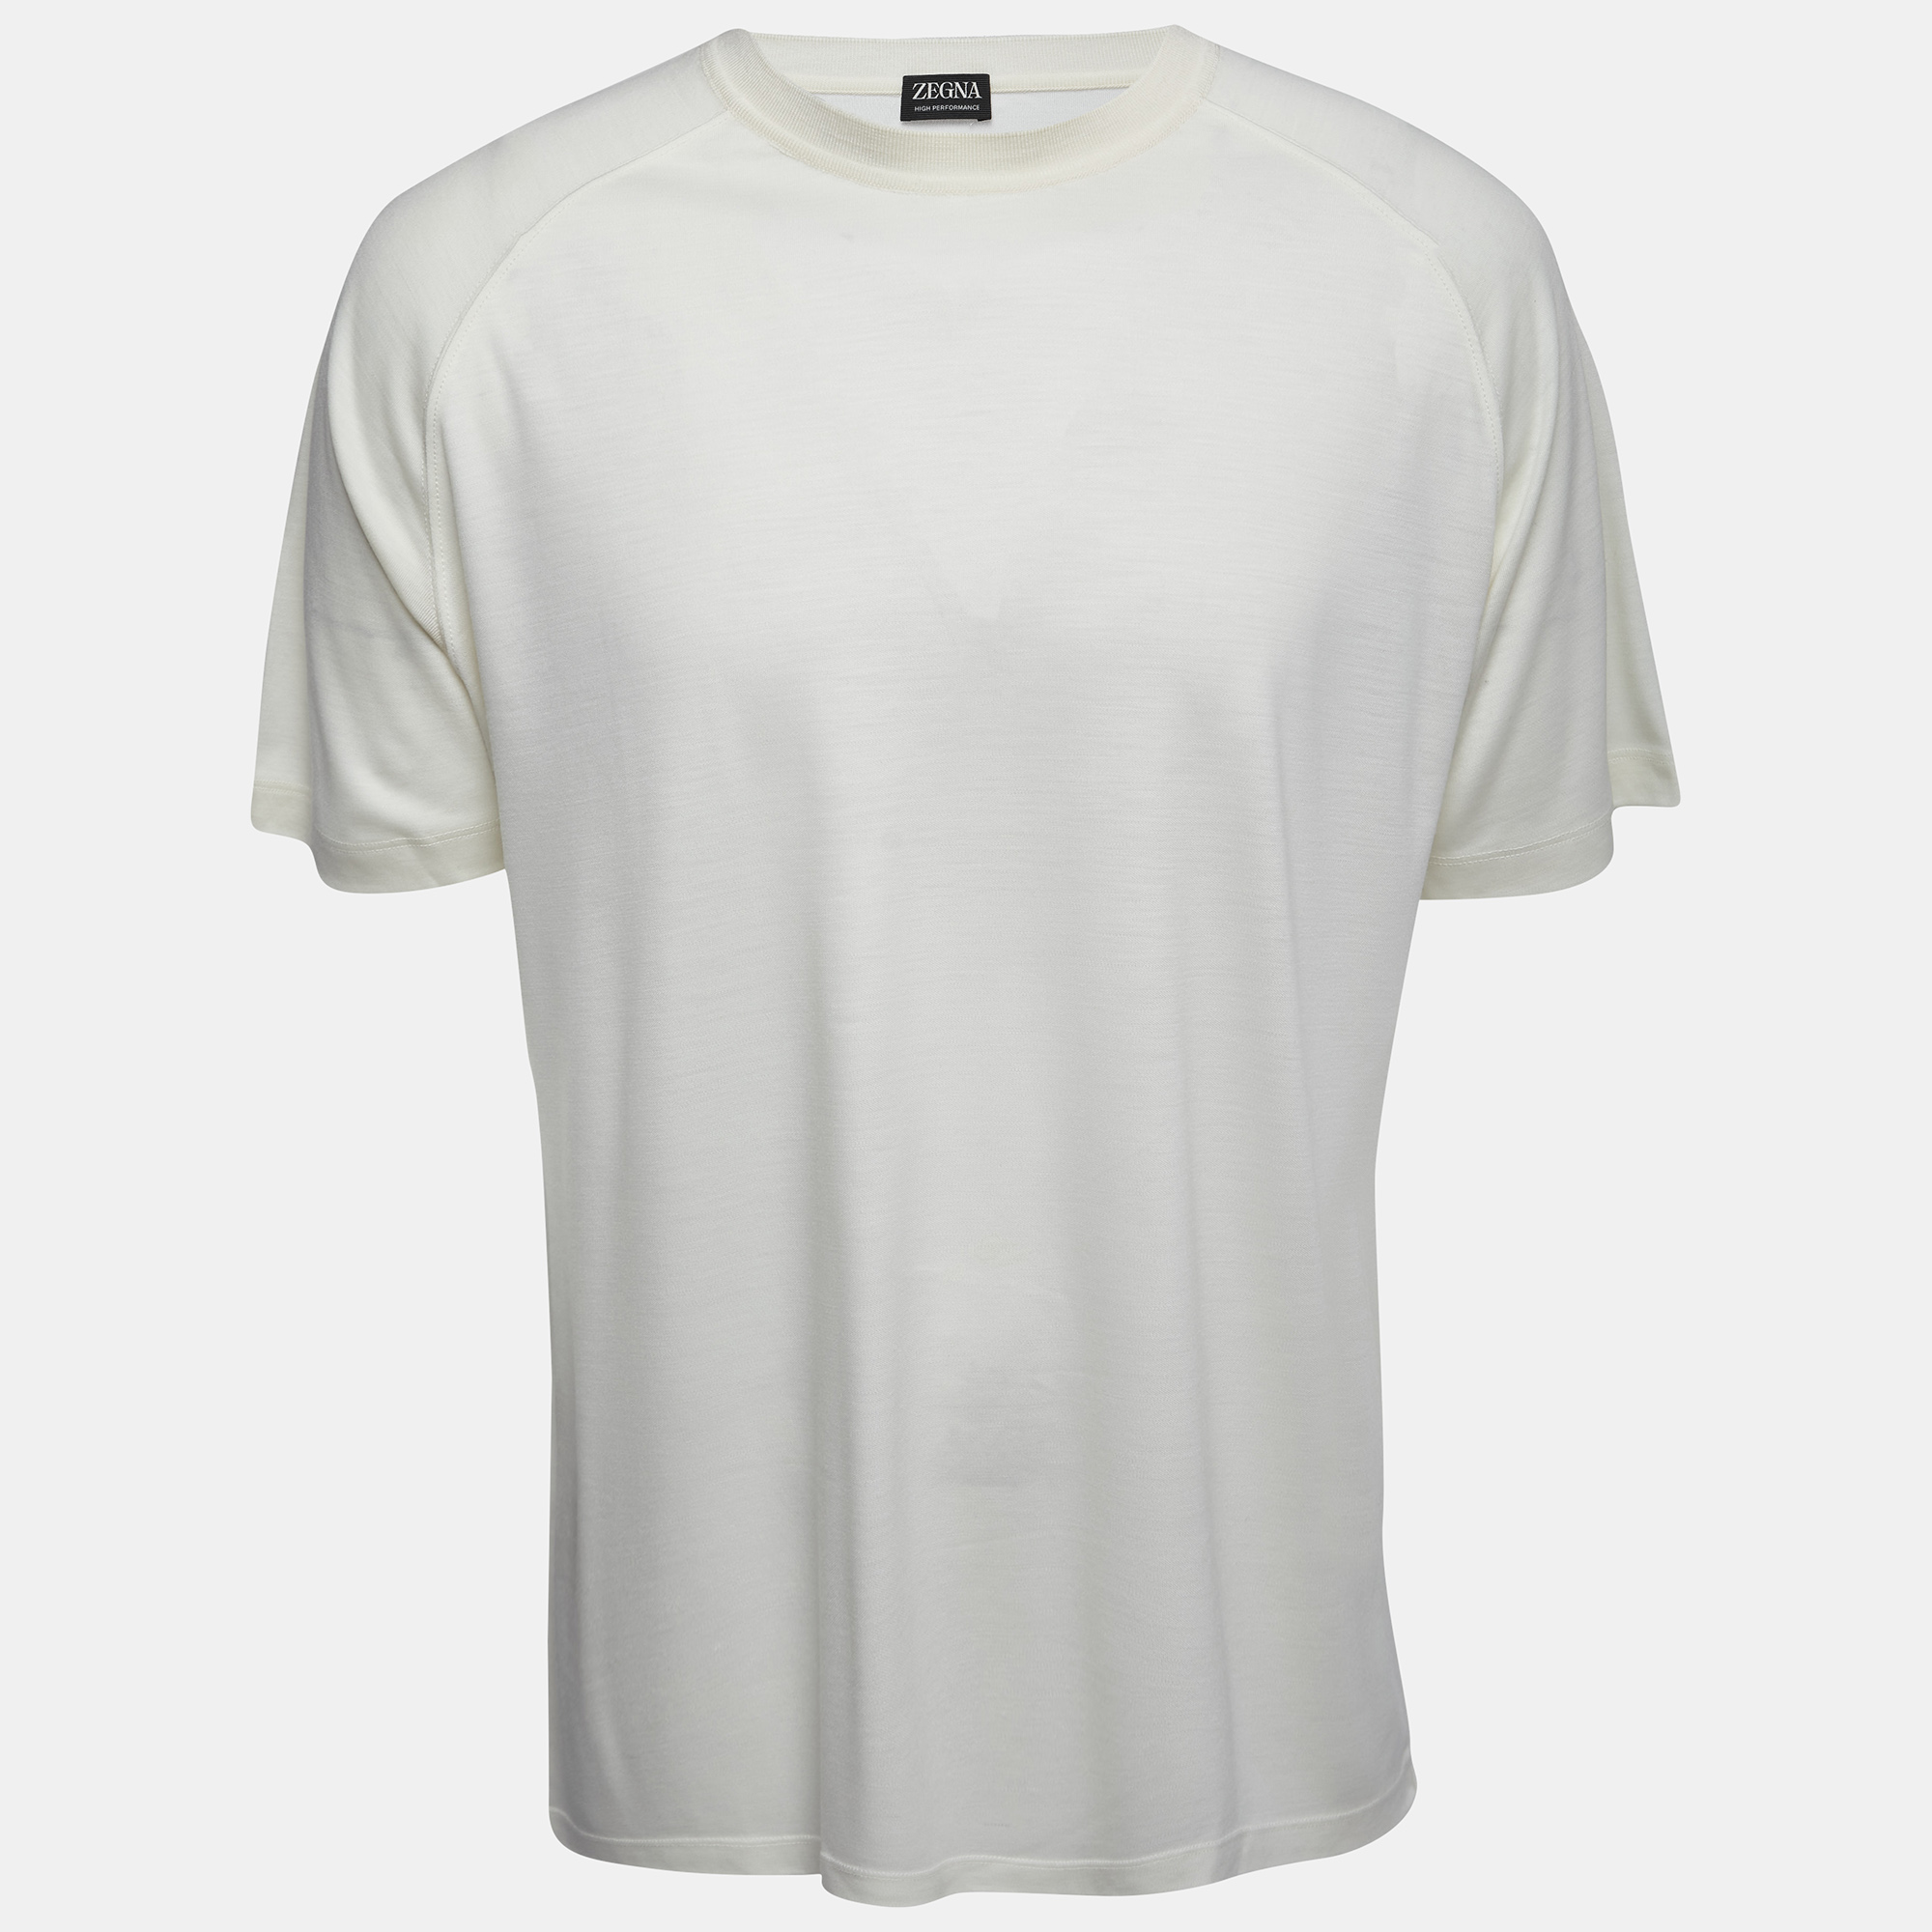 Zegna Cream Wool Crew Neck Half Sleeve T-Shirt XL